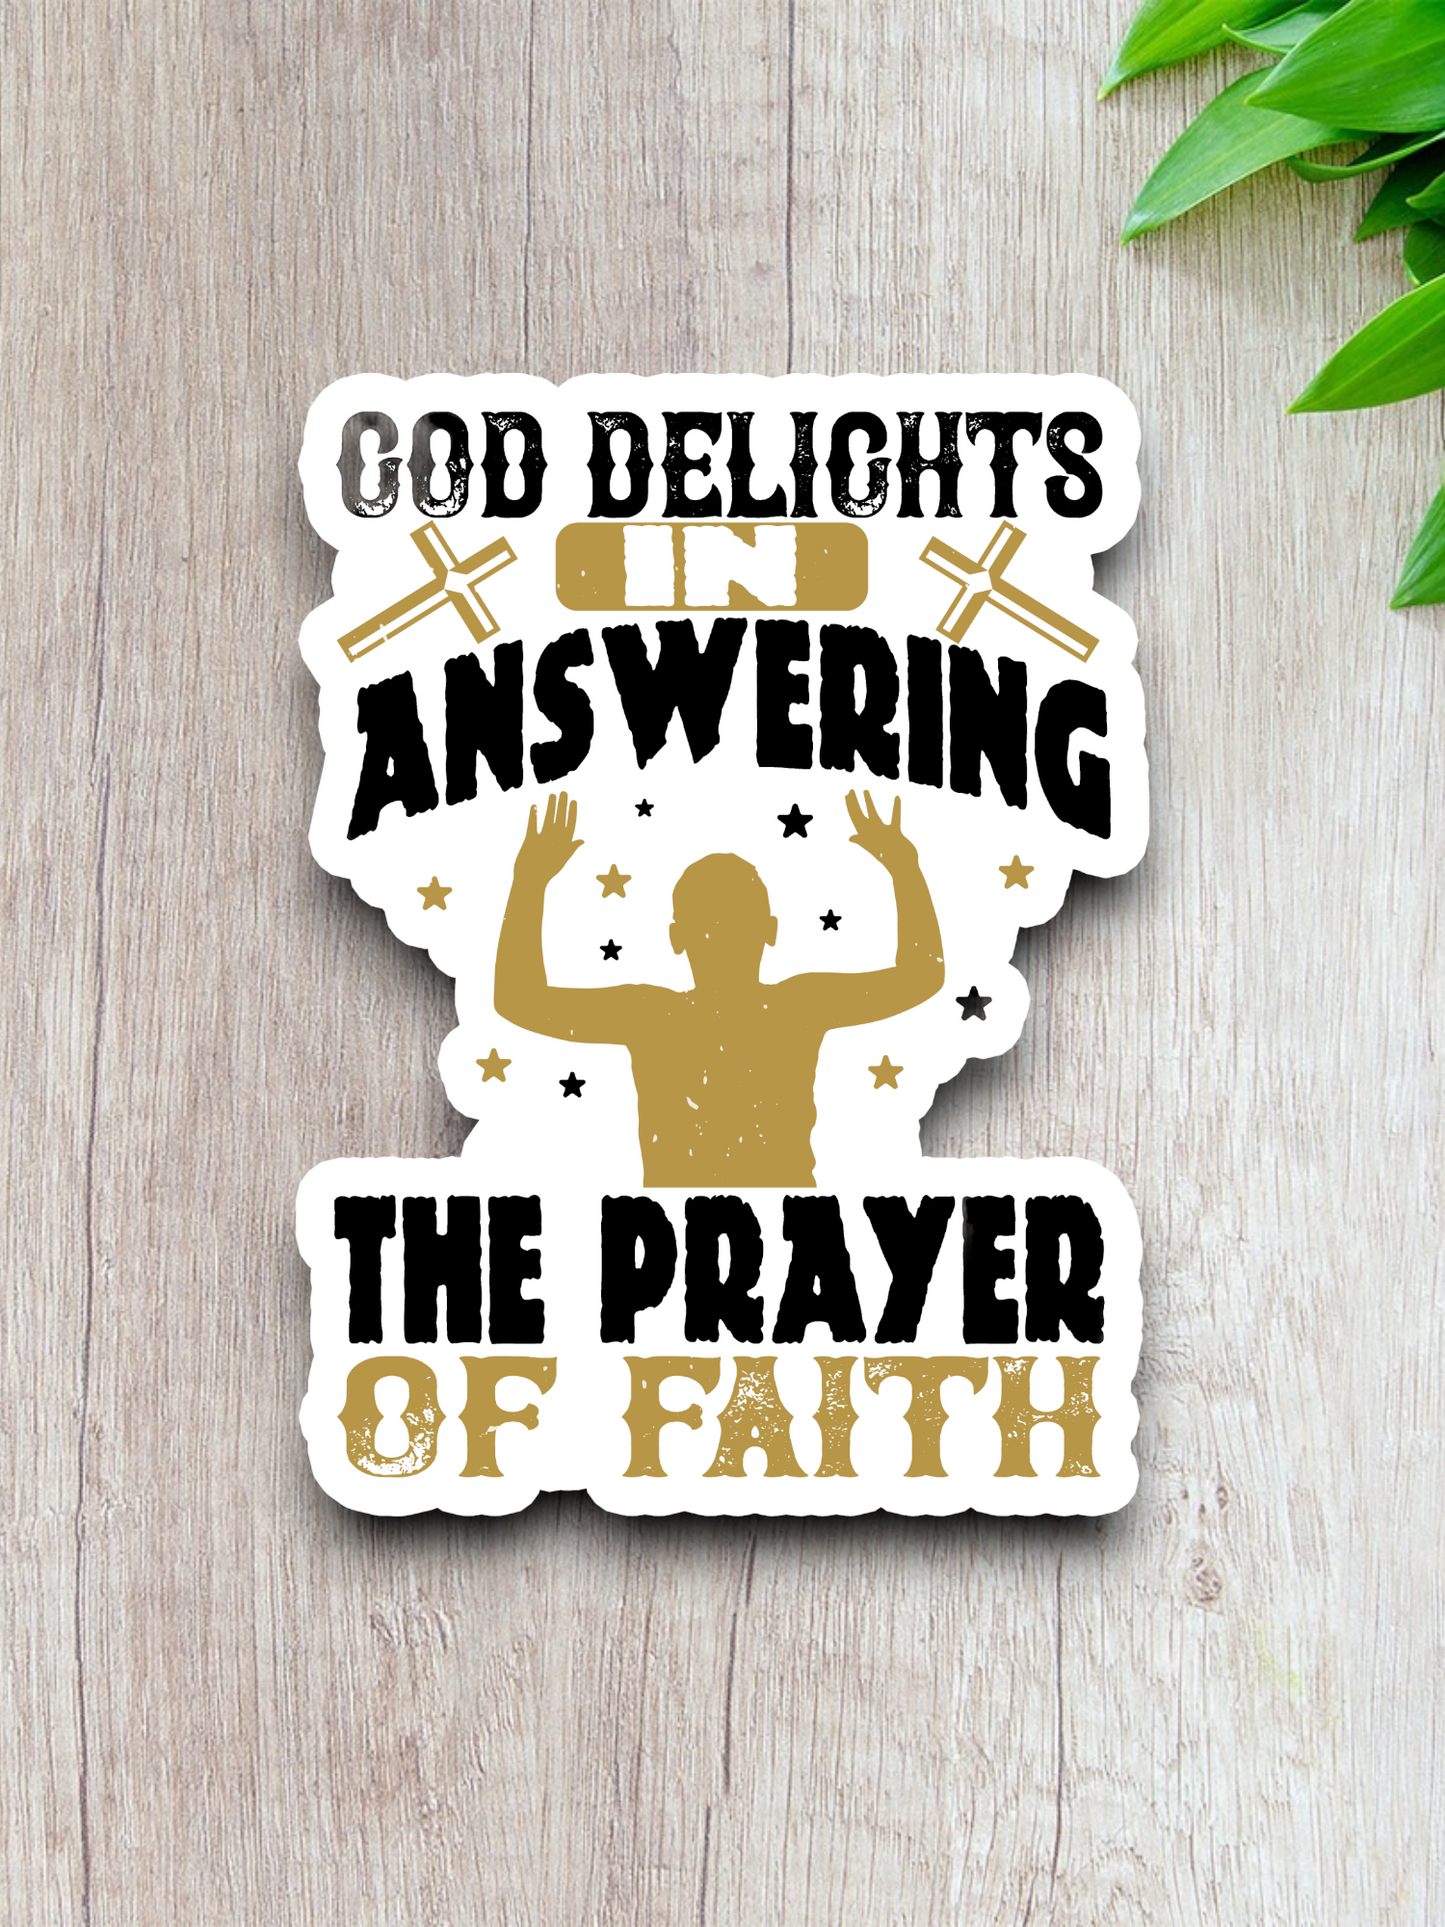 God Delights in Answering the Prayer of Faith - Faith Sticker